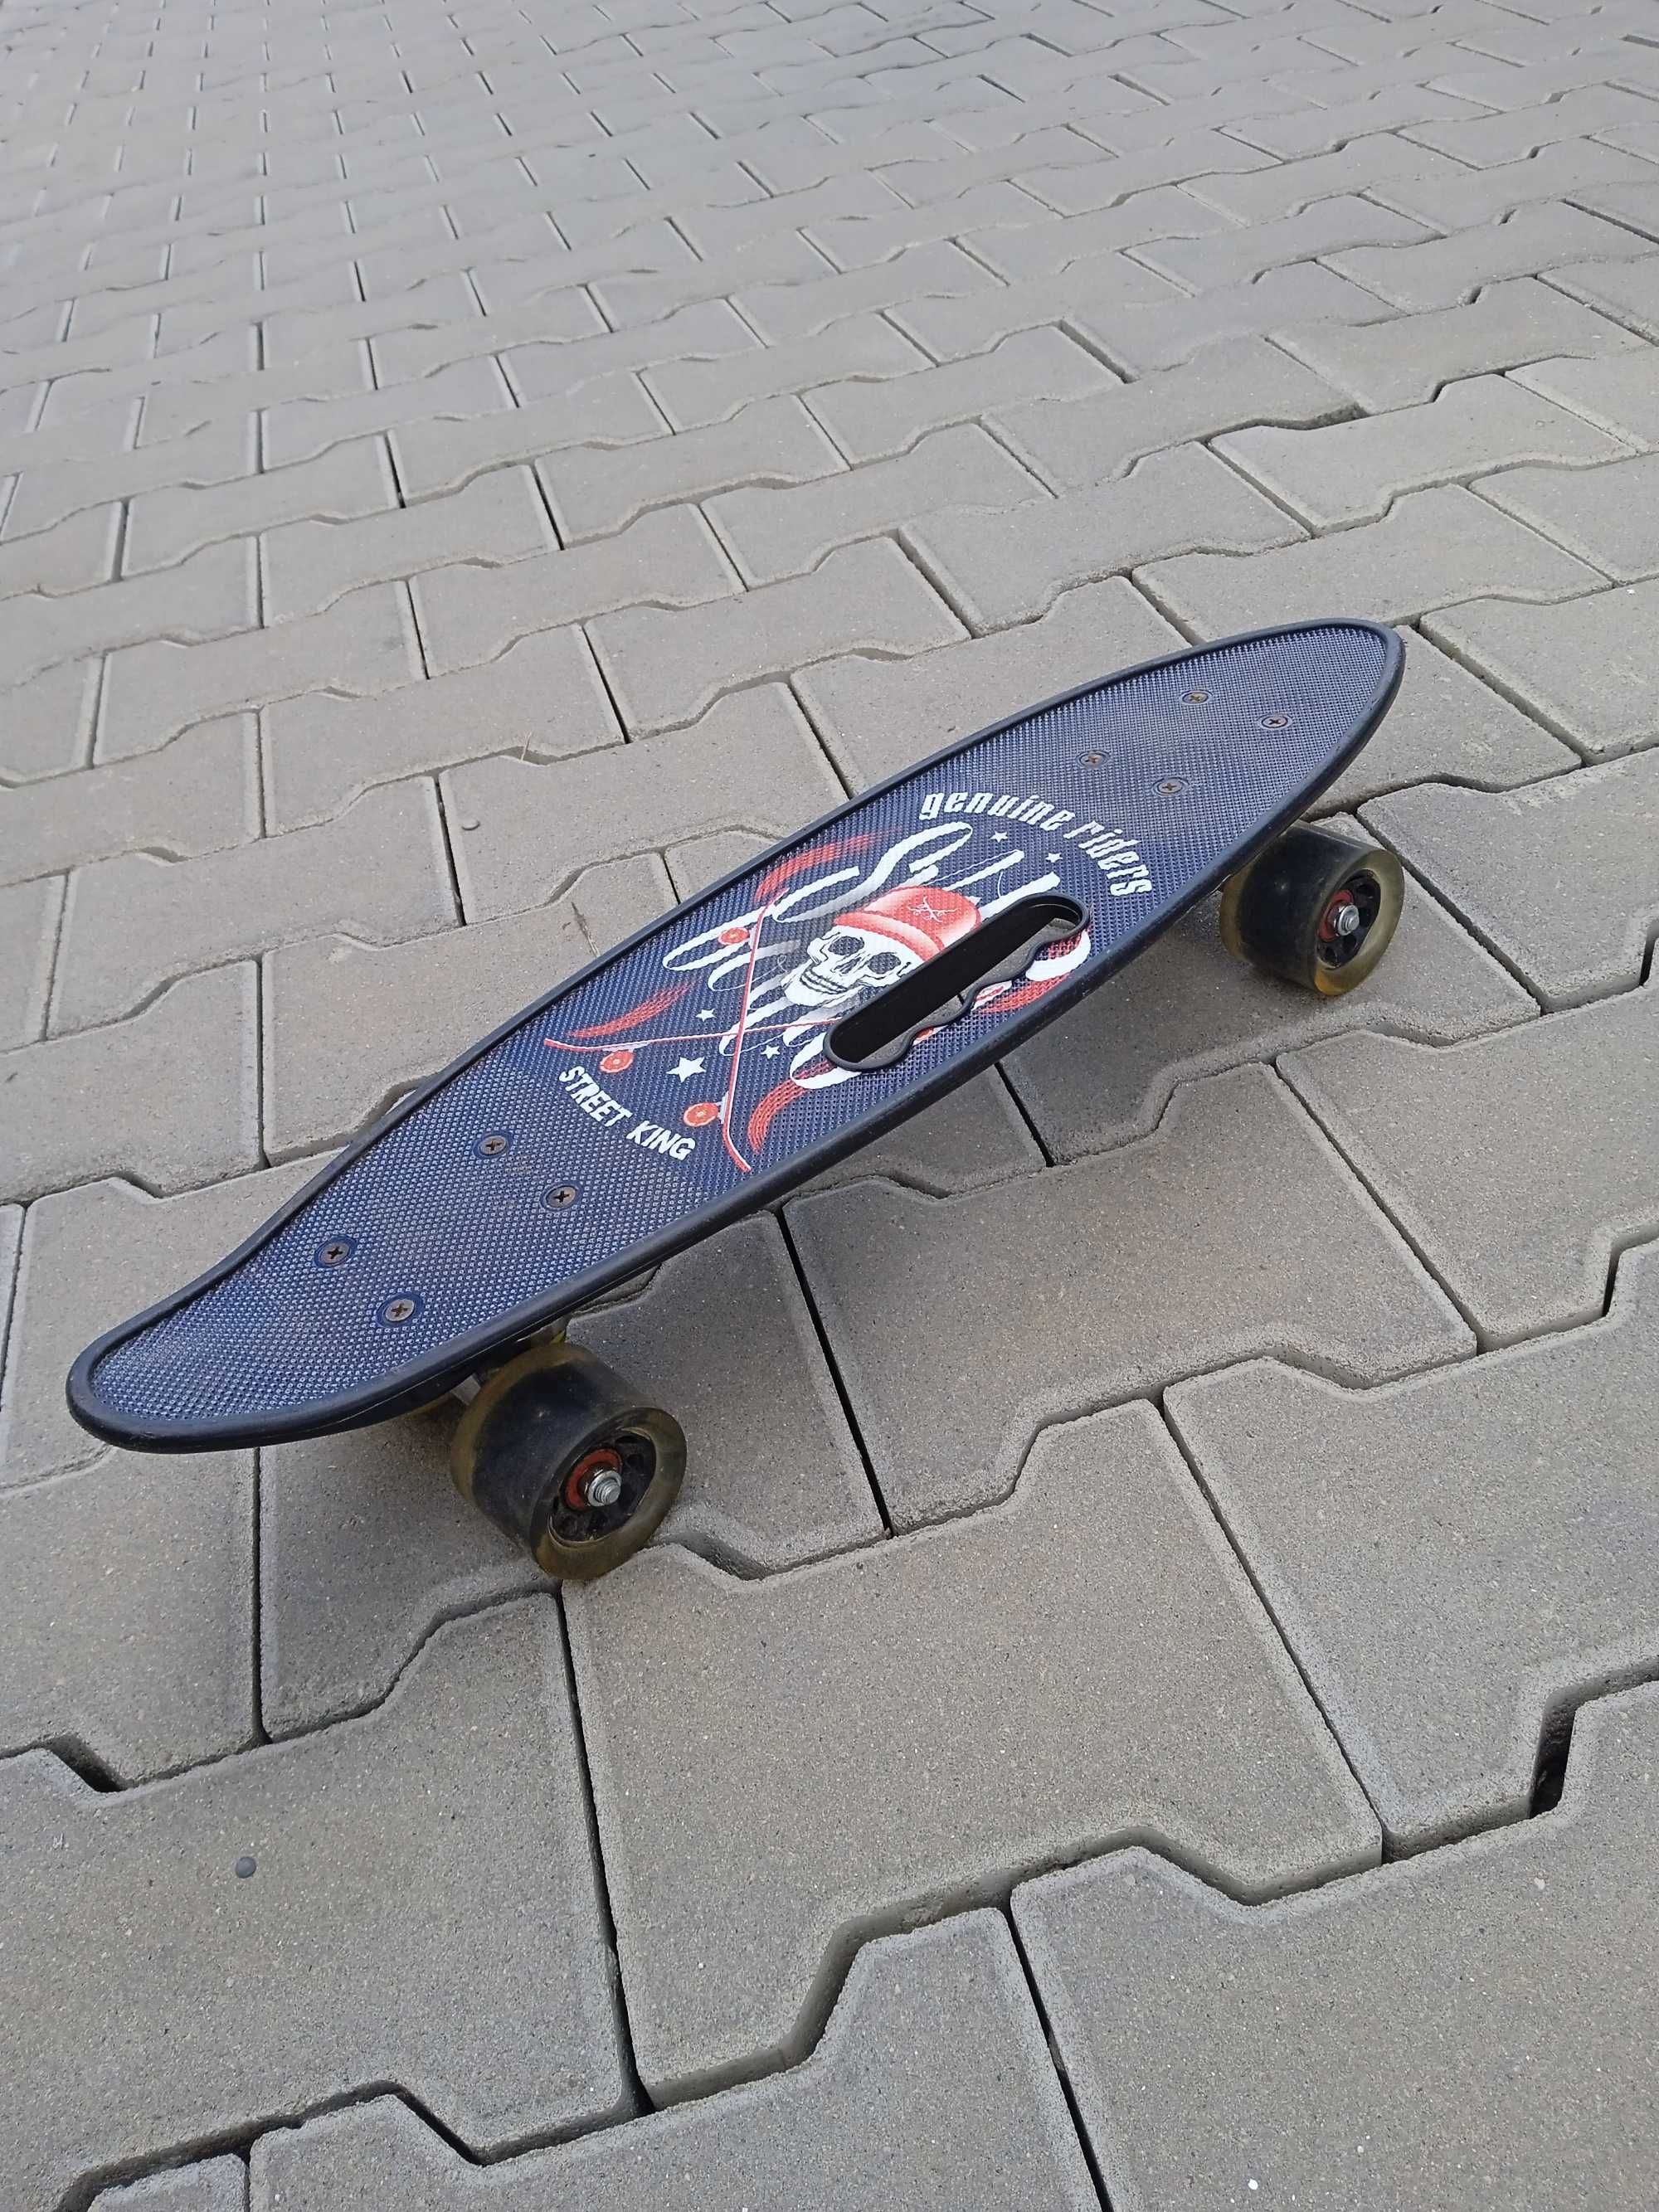 Selling a skateboard